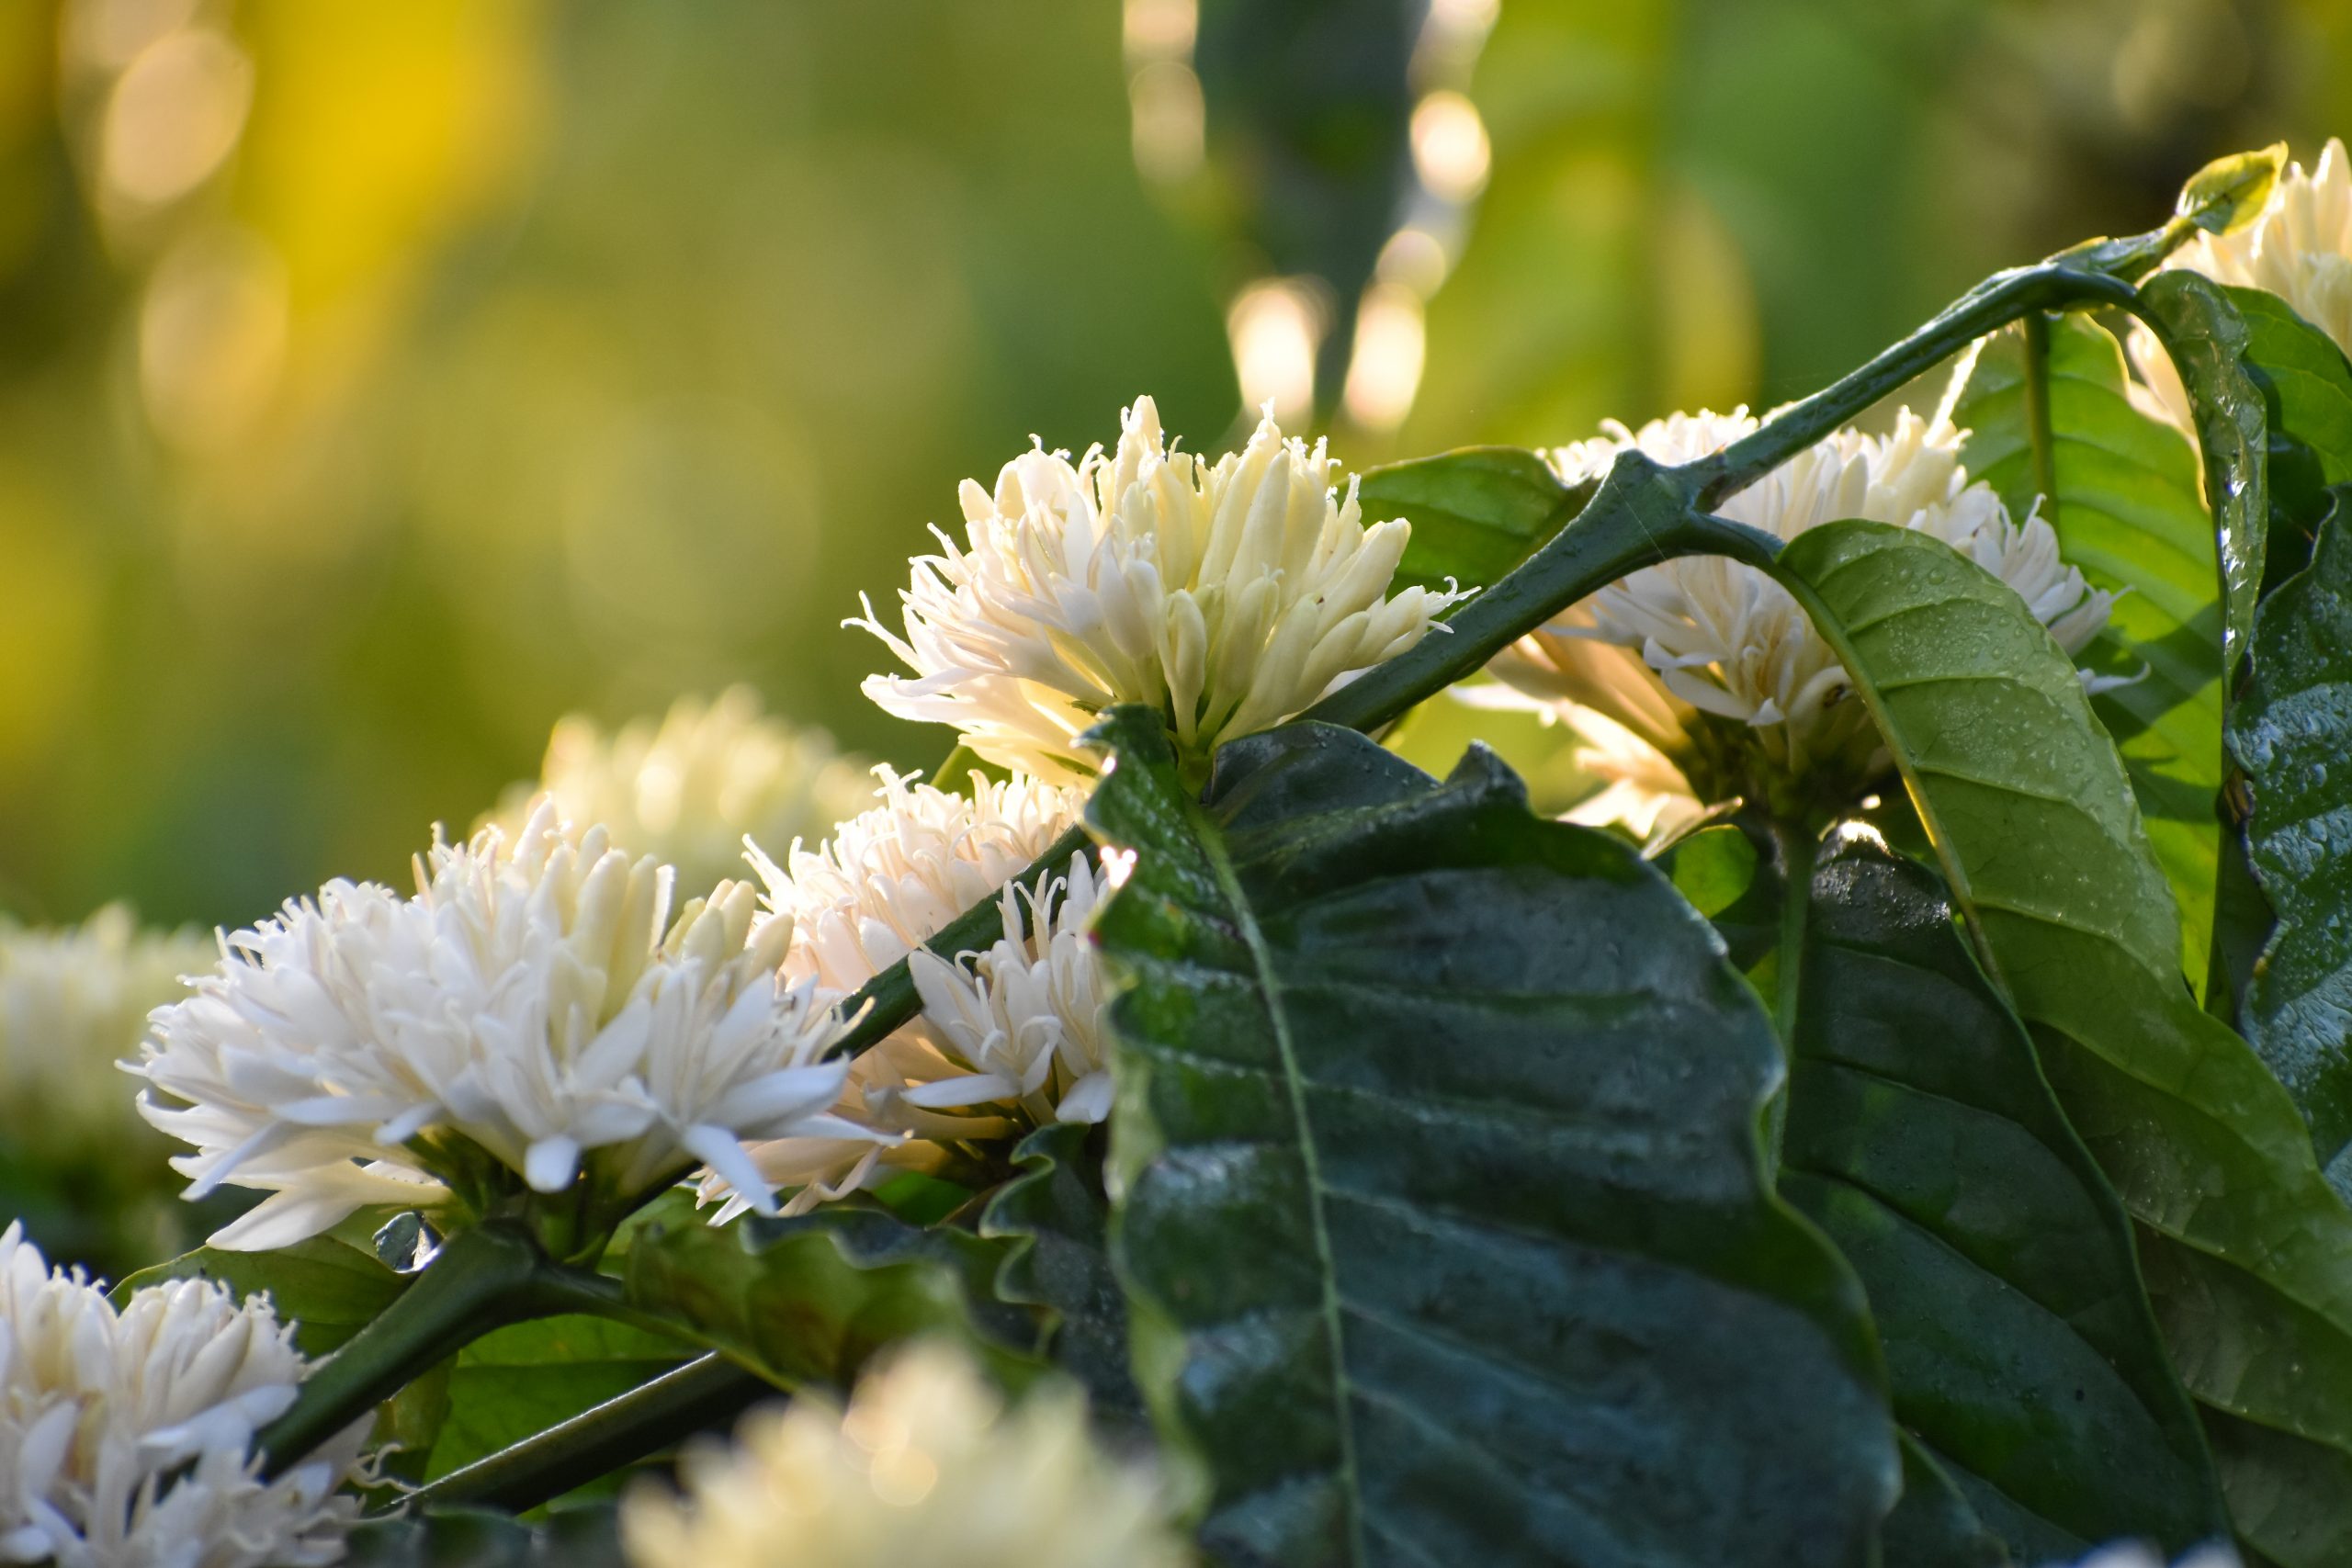 Coffee flower